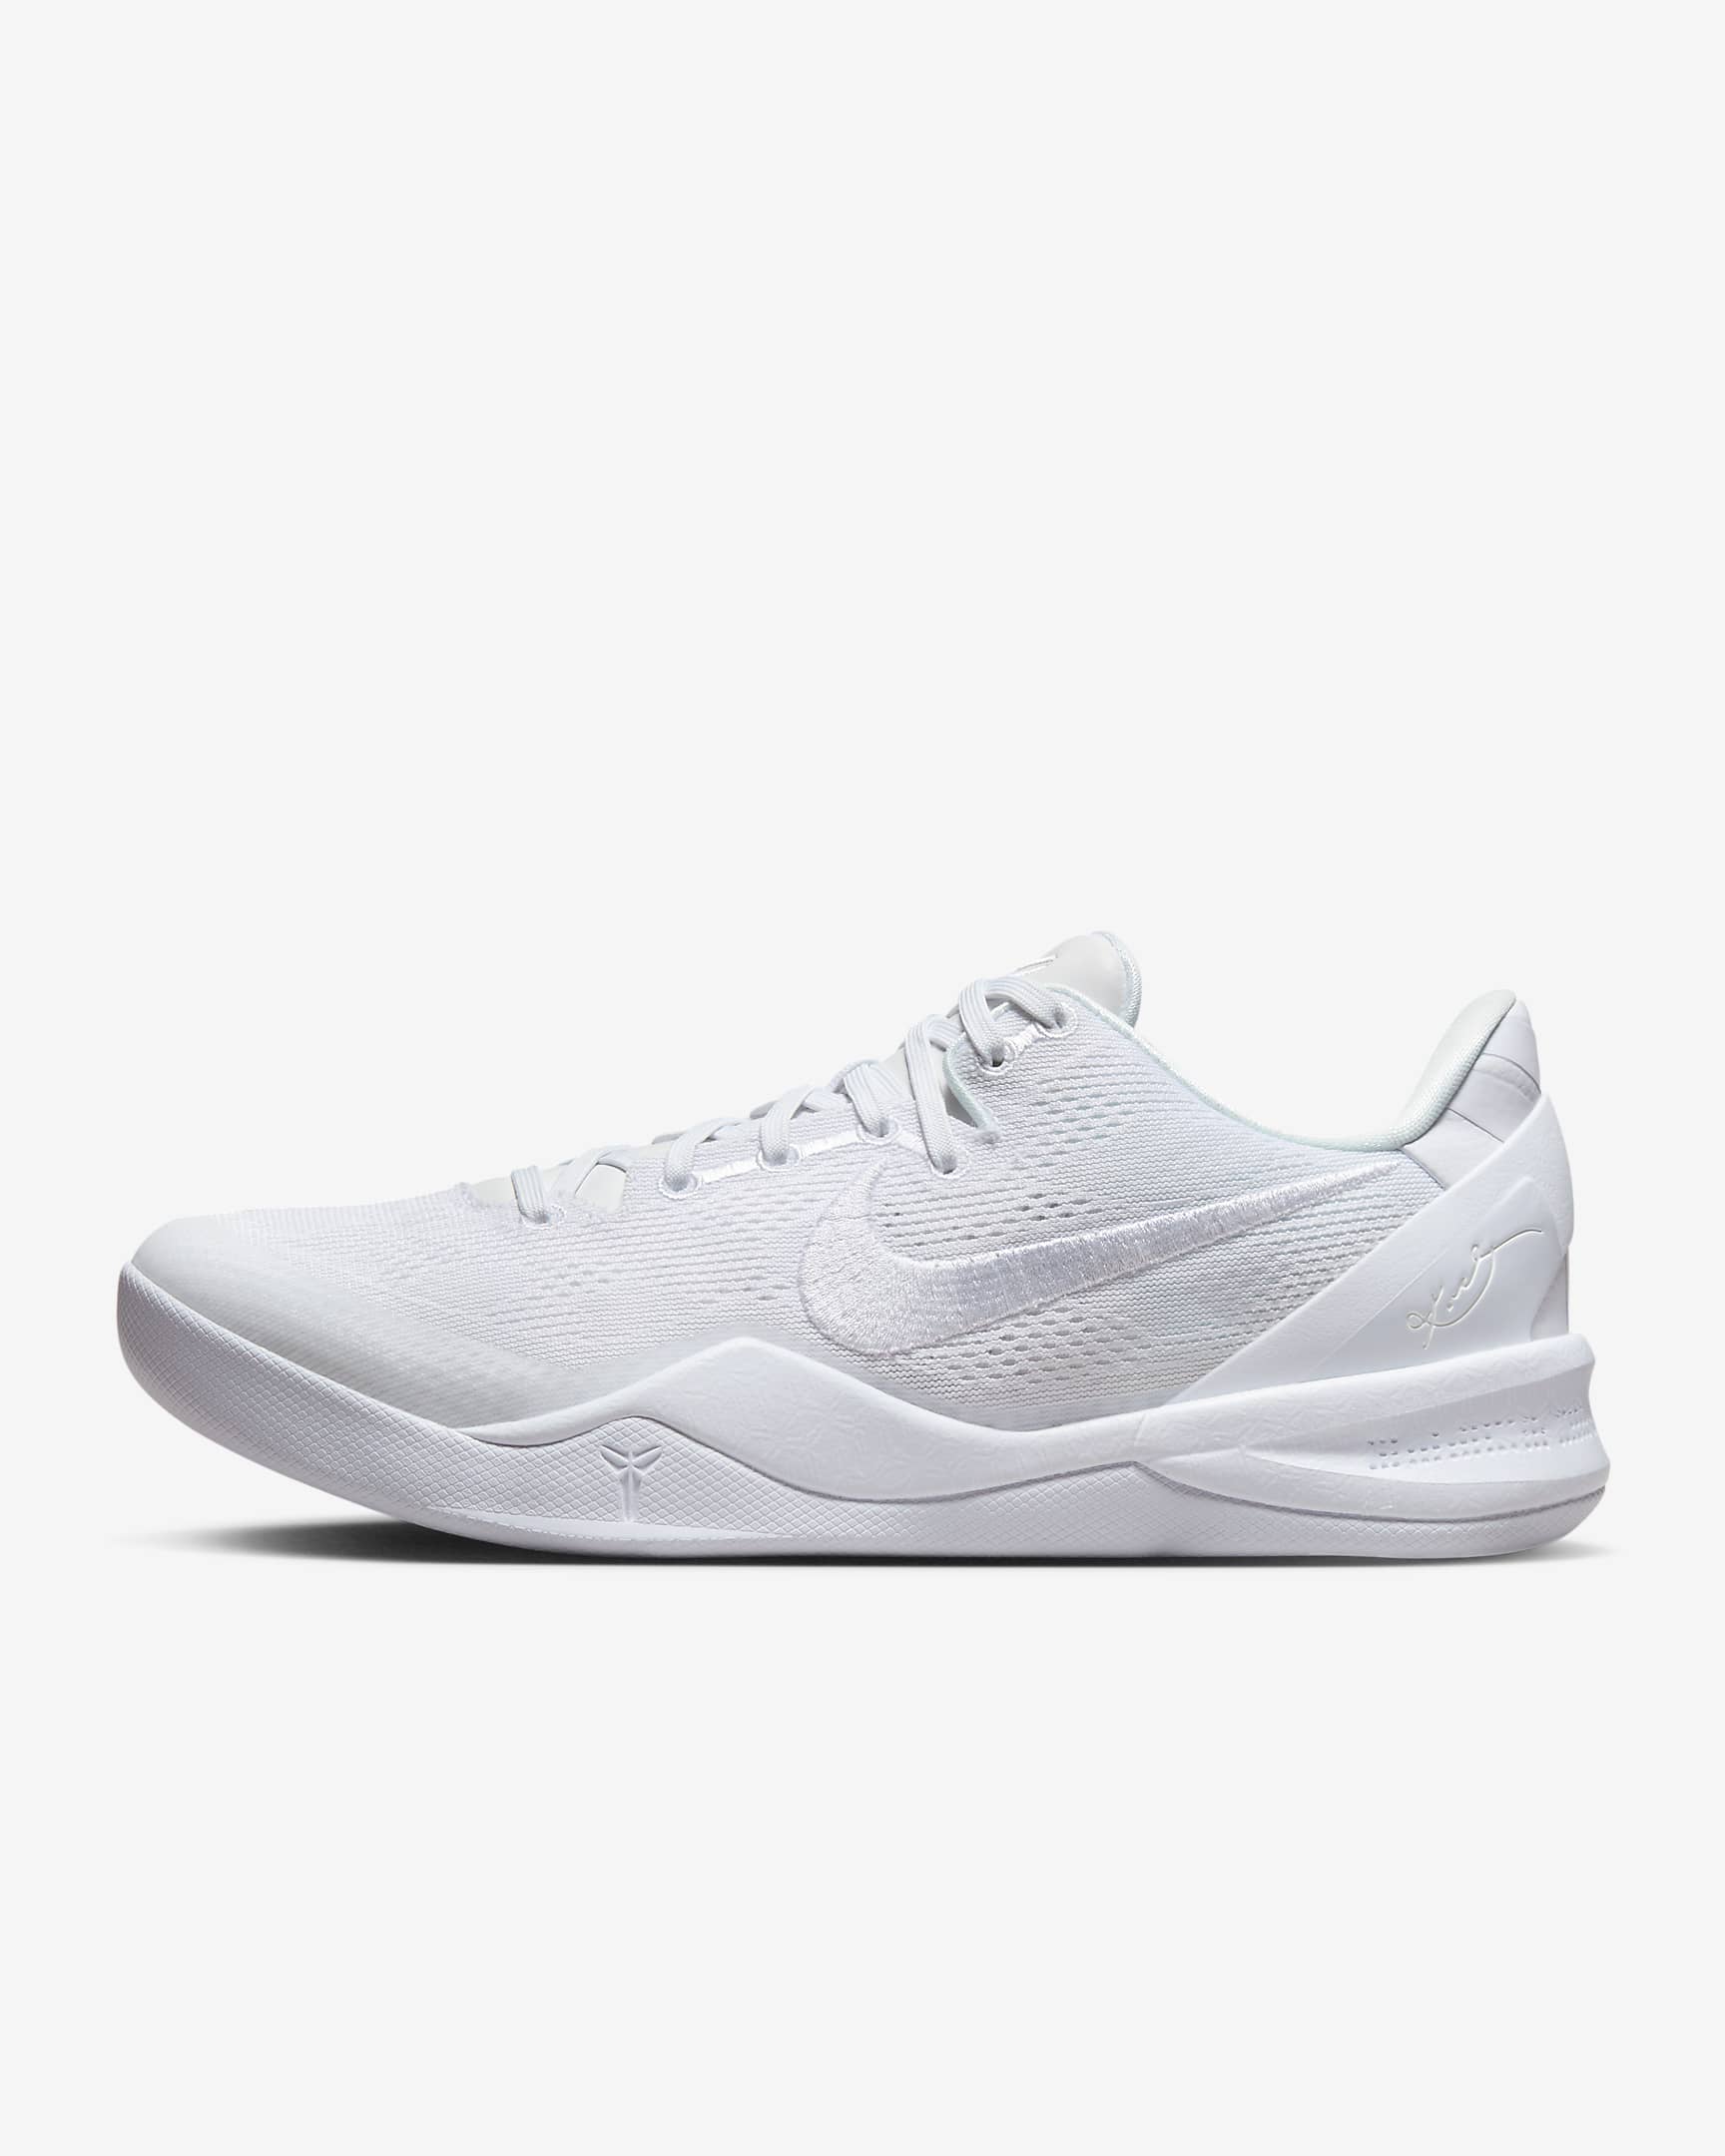 Kobe 8 Protro 'Halo' Basketball Shoes. Nike AT